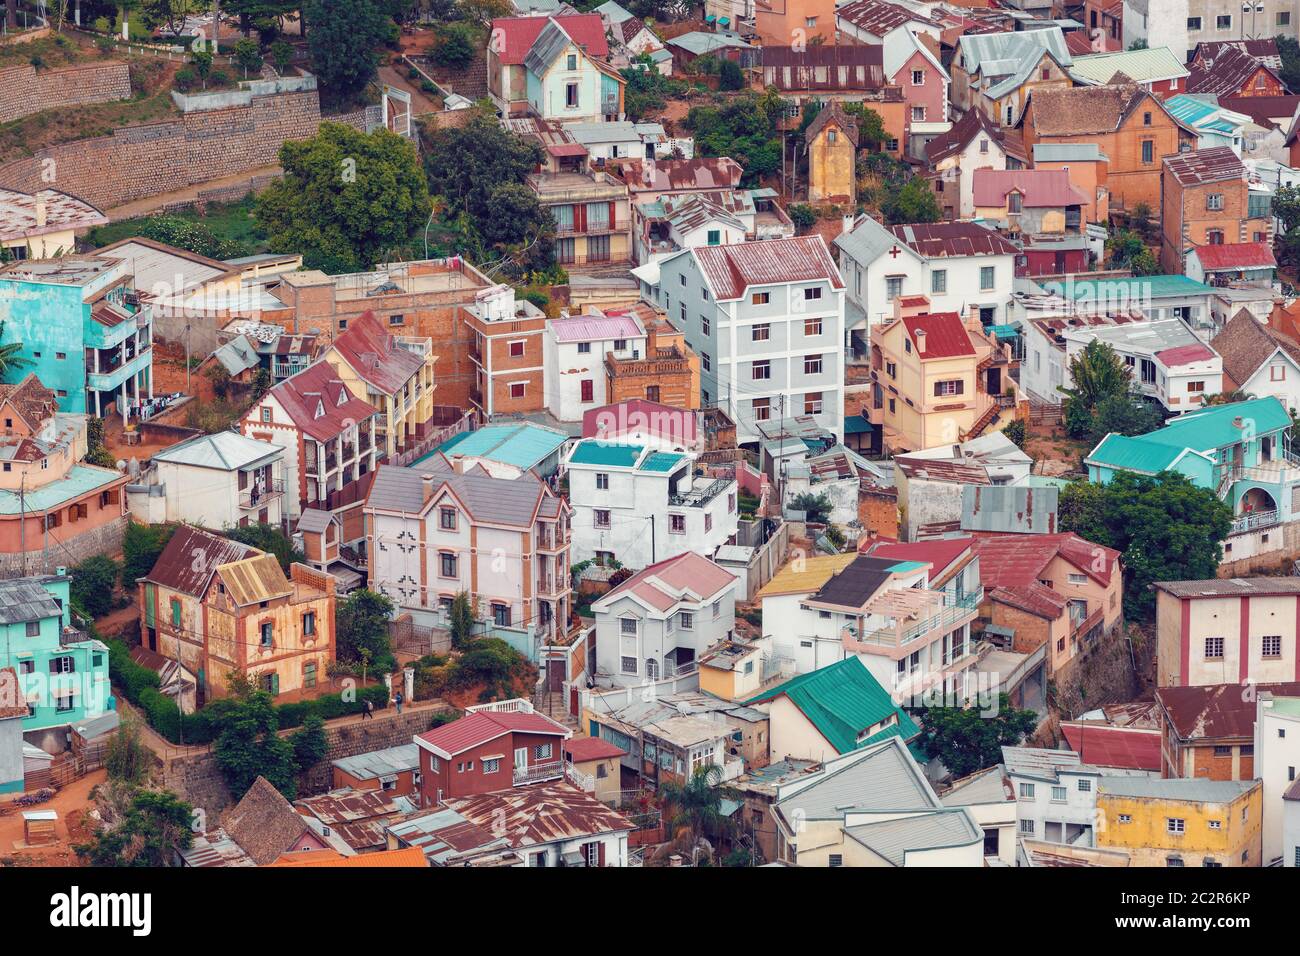 Antananarivo cityscape, Tana, capital of Madagascar, french name Tananarive and short name Tana, Poor capital and largest city in Madagascar Stock Photo